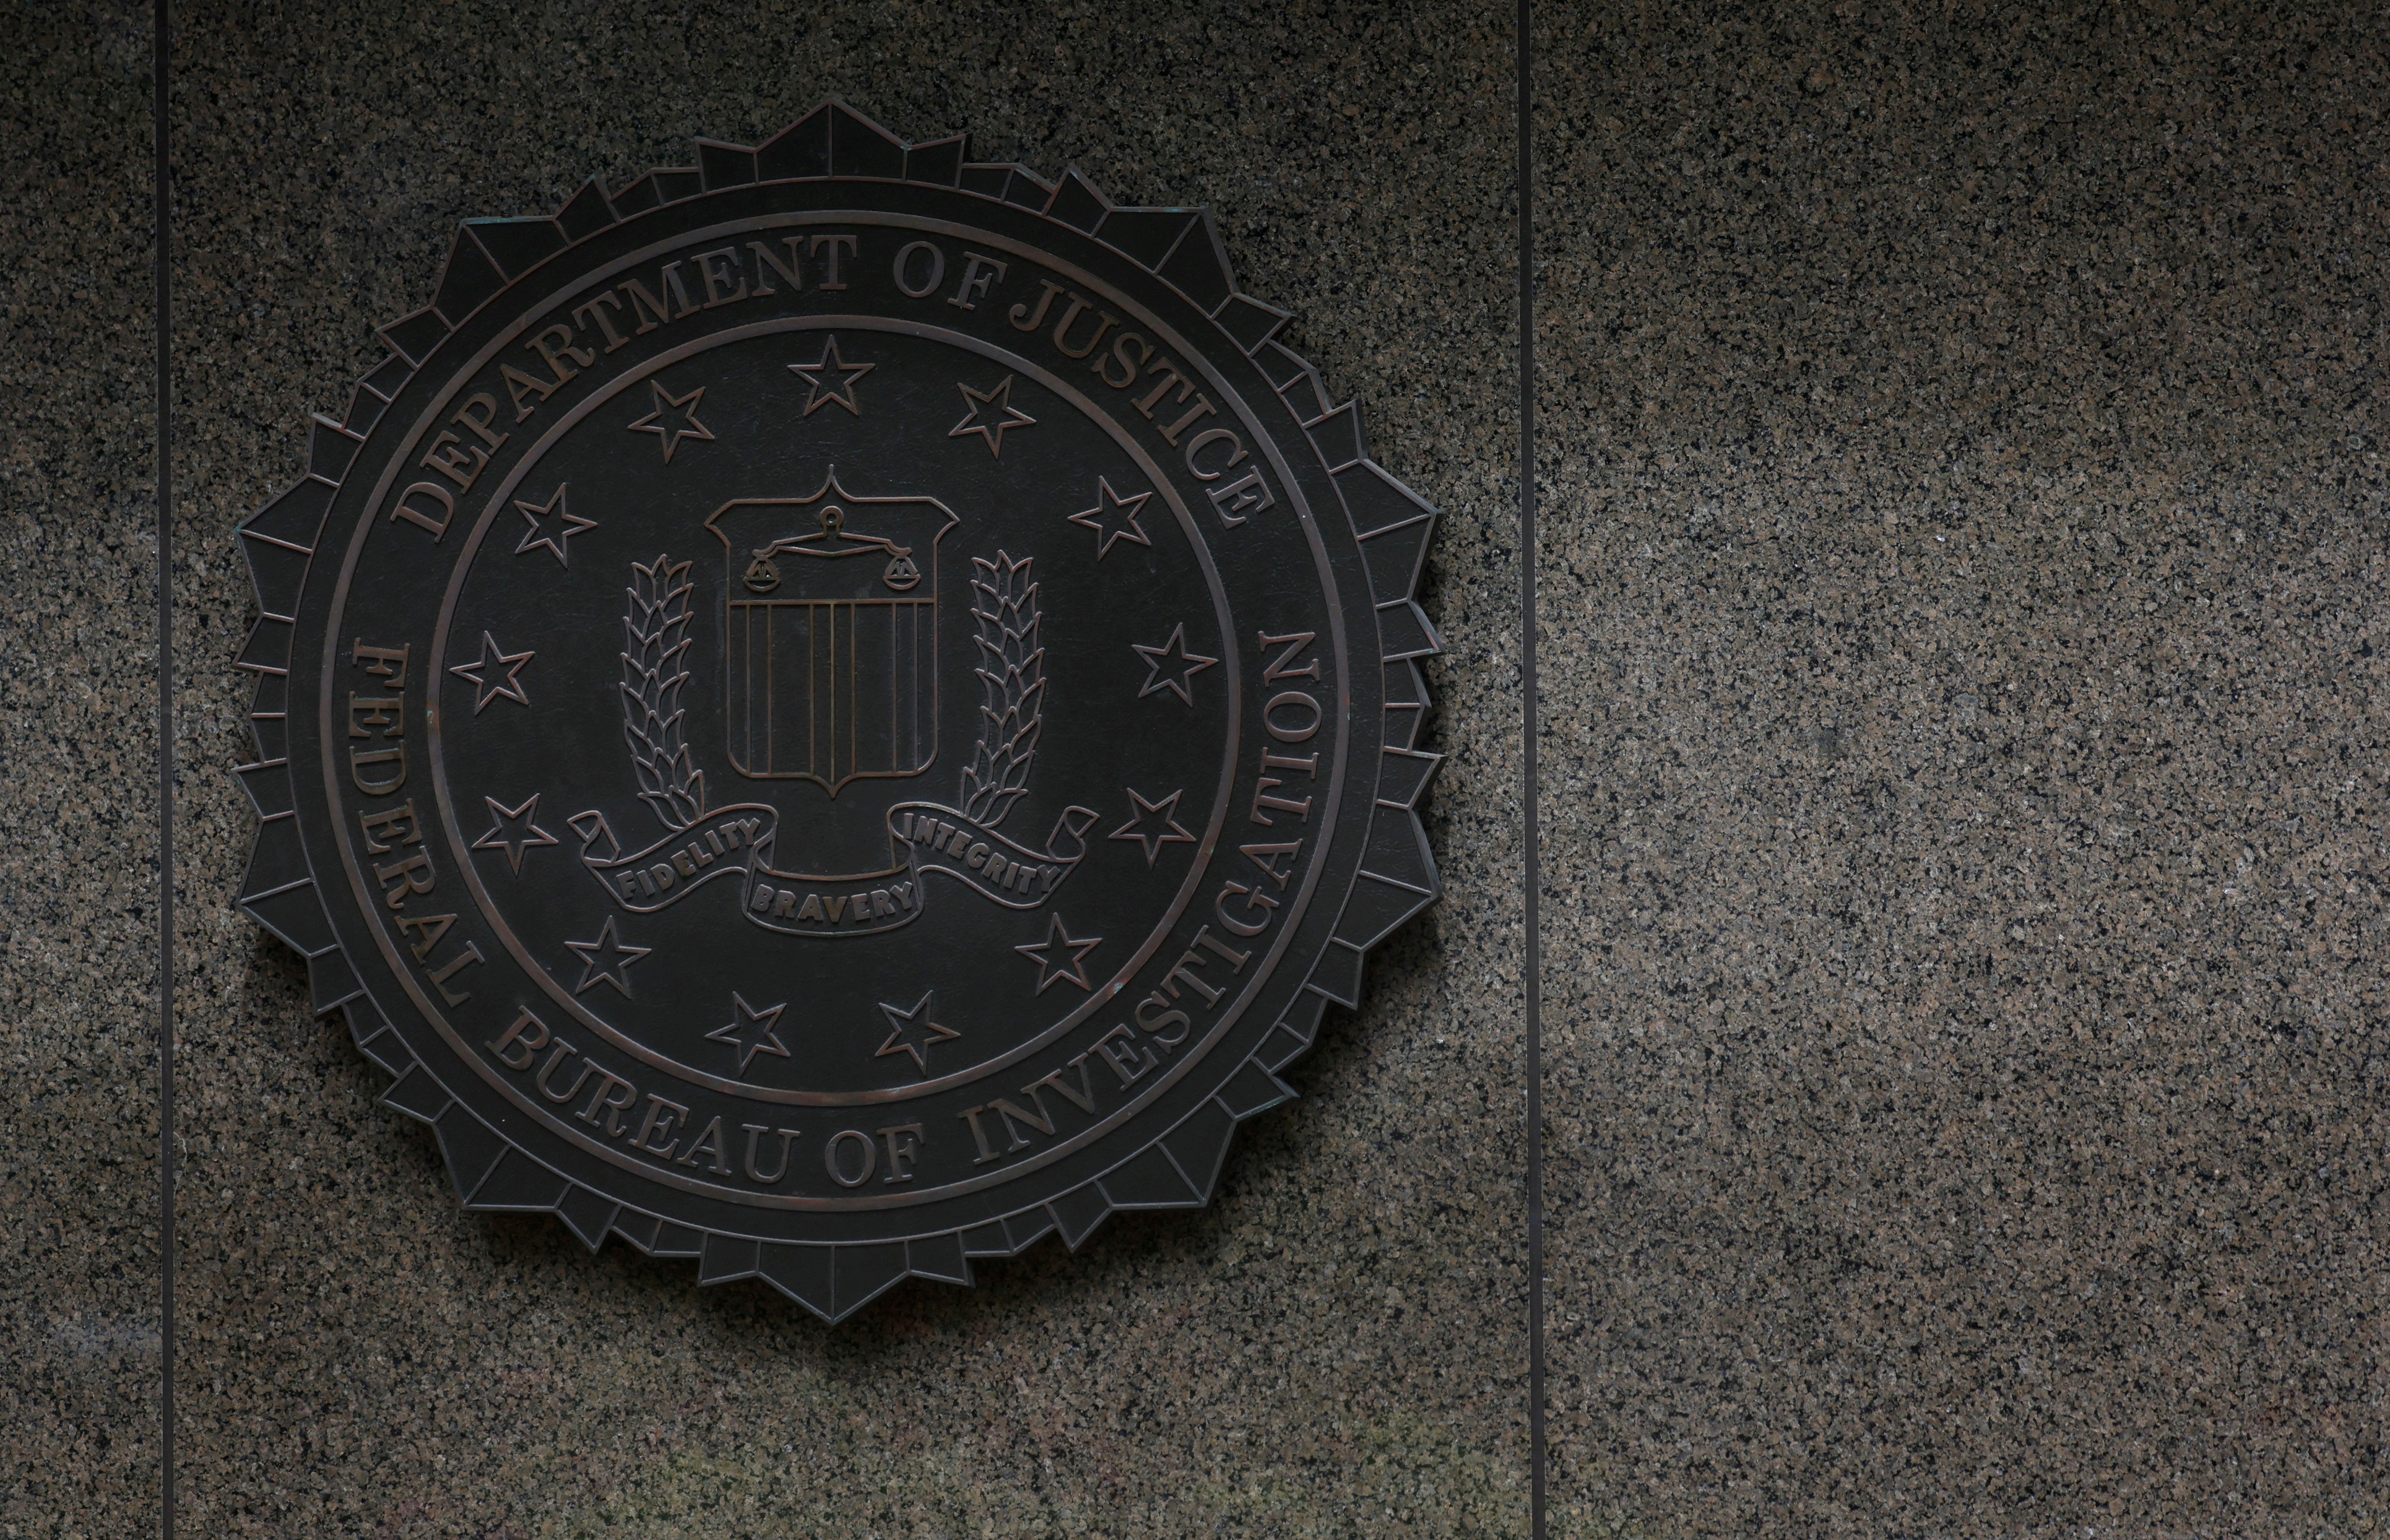 Scenes outside of the FBI building in Washington